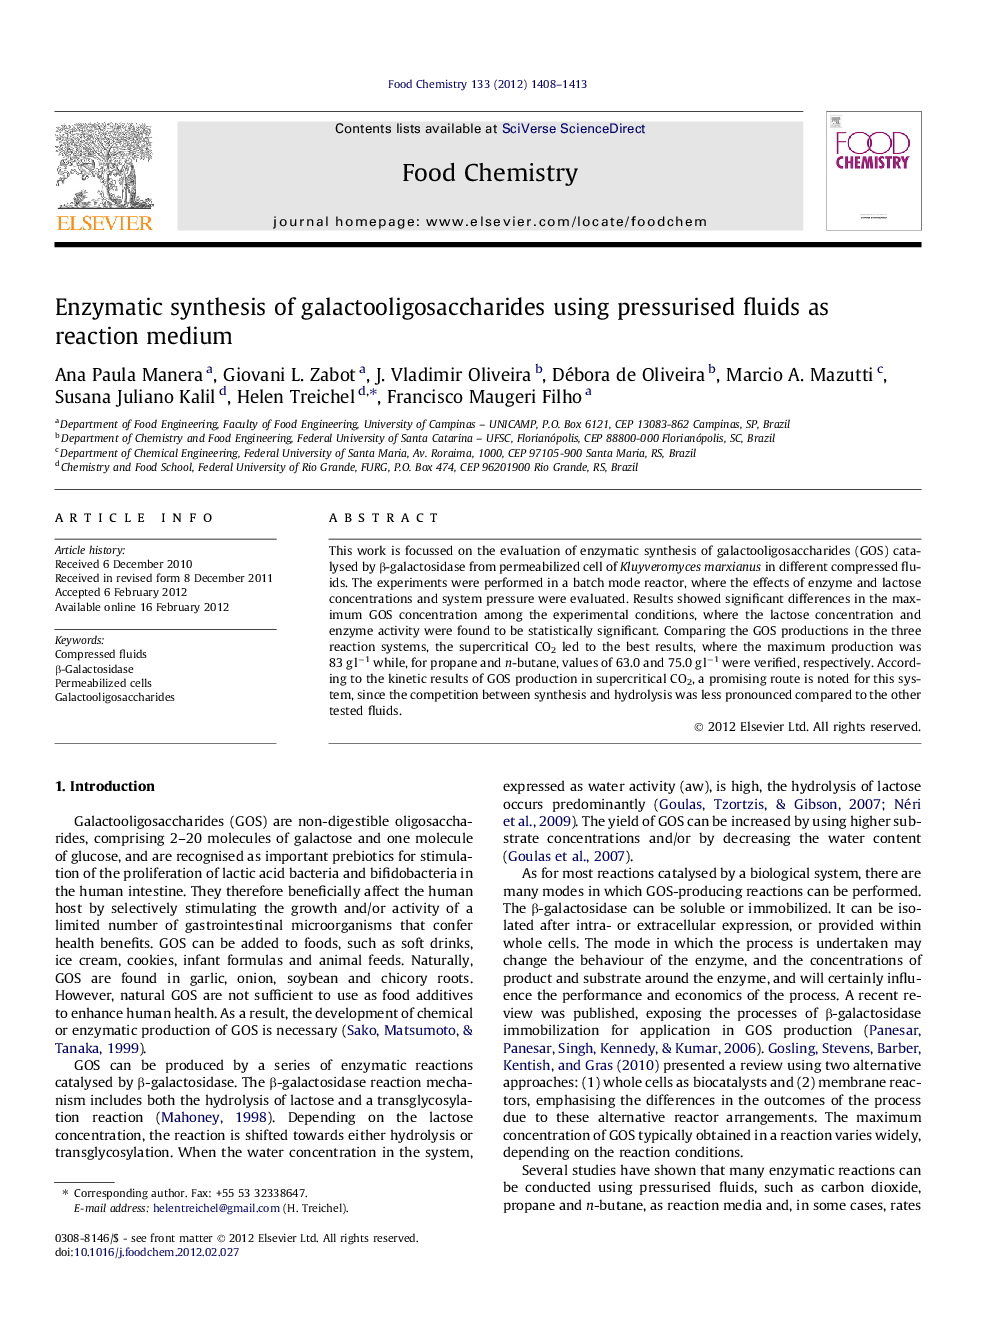 Enzymatic synthesis of galactooligosaccharides using pressurised fluids as reaction medium